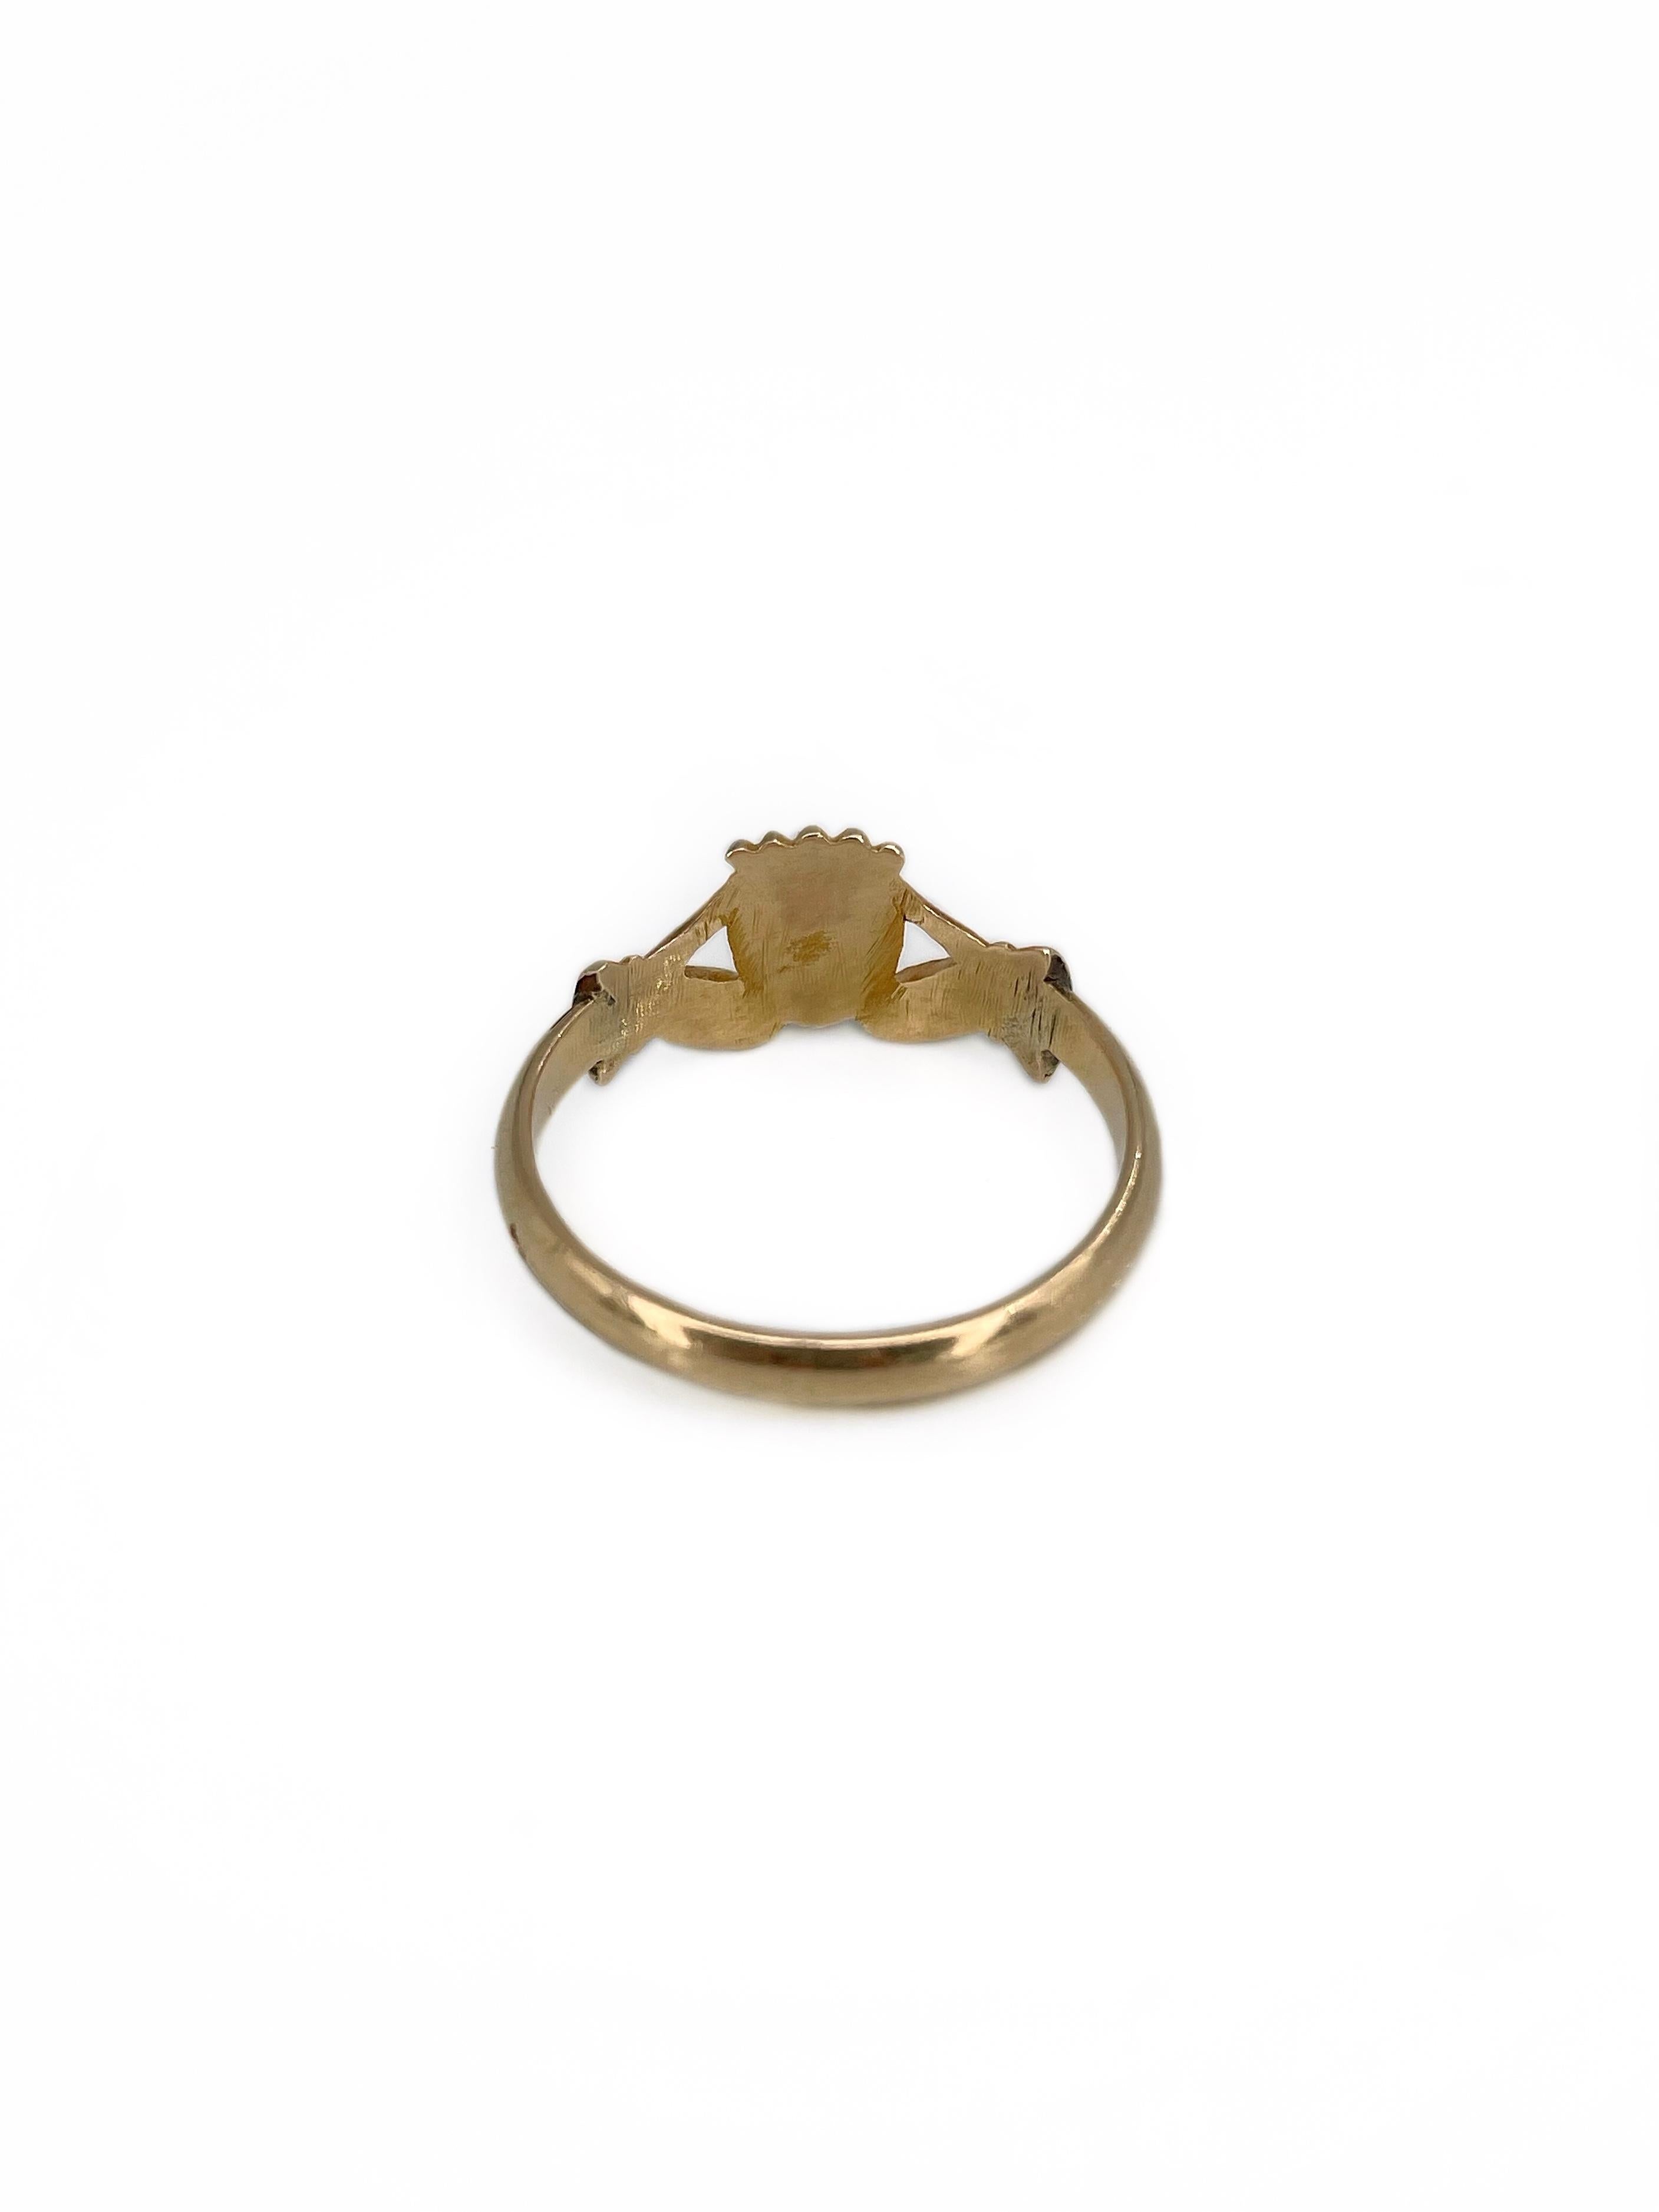 Women's or Men's Antique 18 Karat Yellow Gold Claddagh Engagement Ring